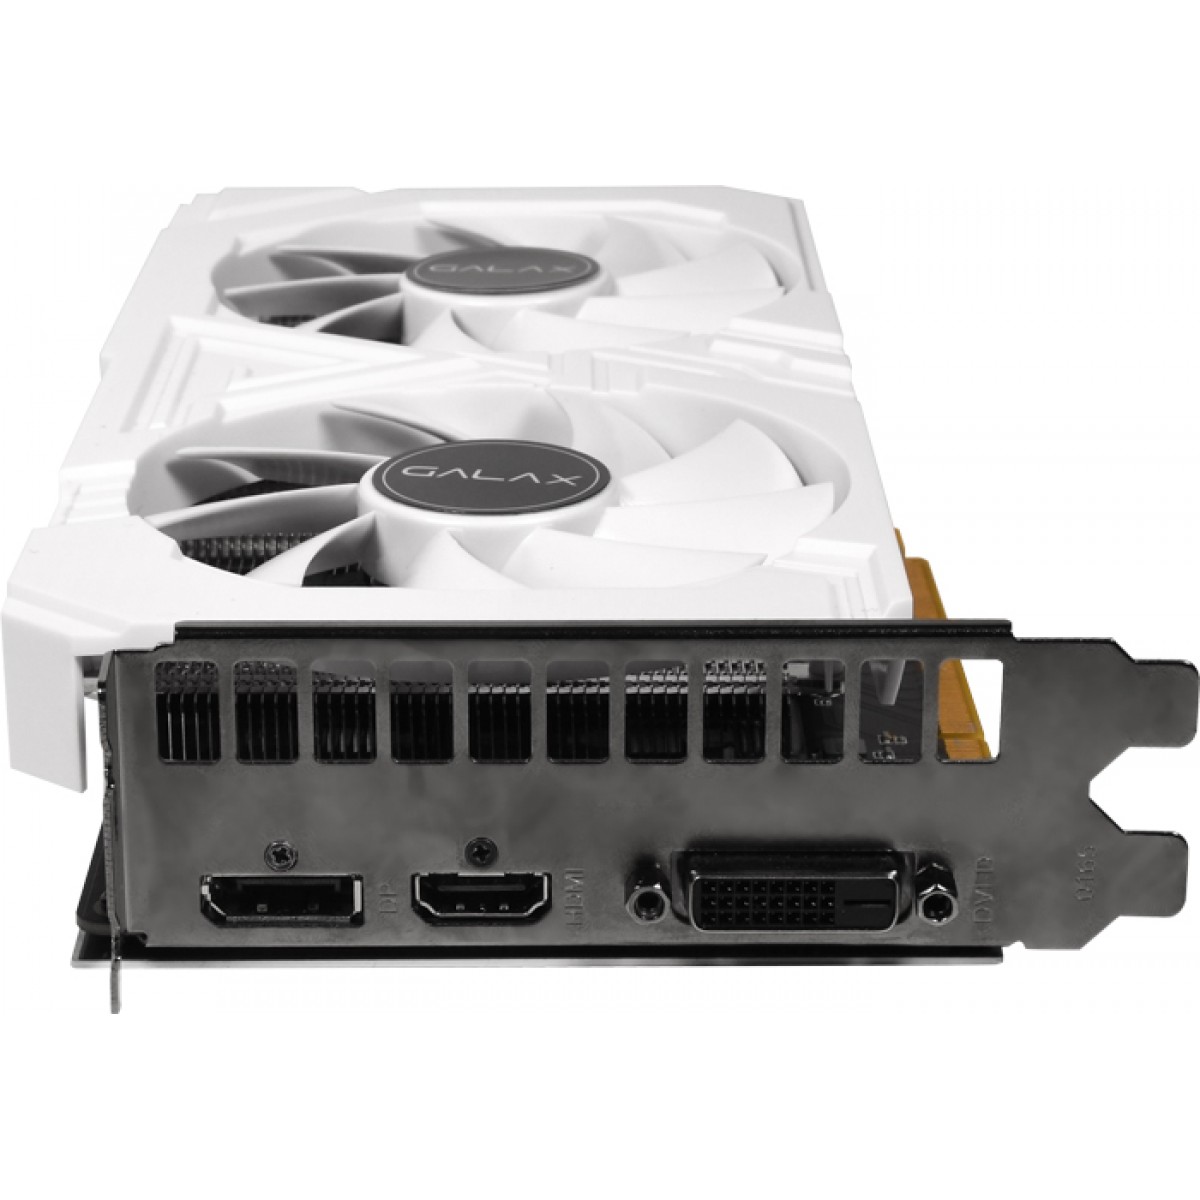 Placa de Vídeo Galax GeForce GTX 1660 Super EX (1-Click OC) Dual, 6GB GDDR6, 192Bit, White, 60SRL7DS04WS